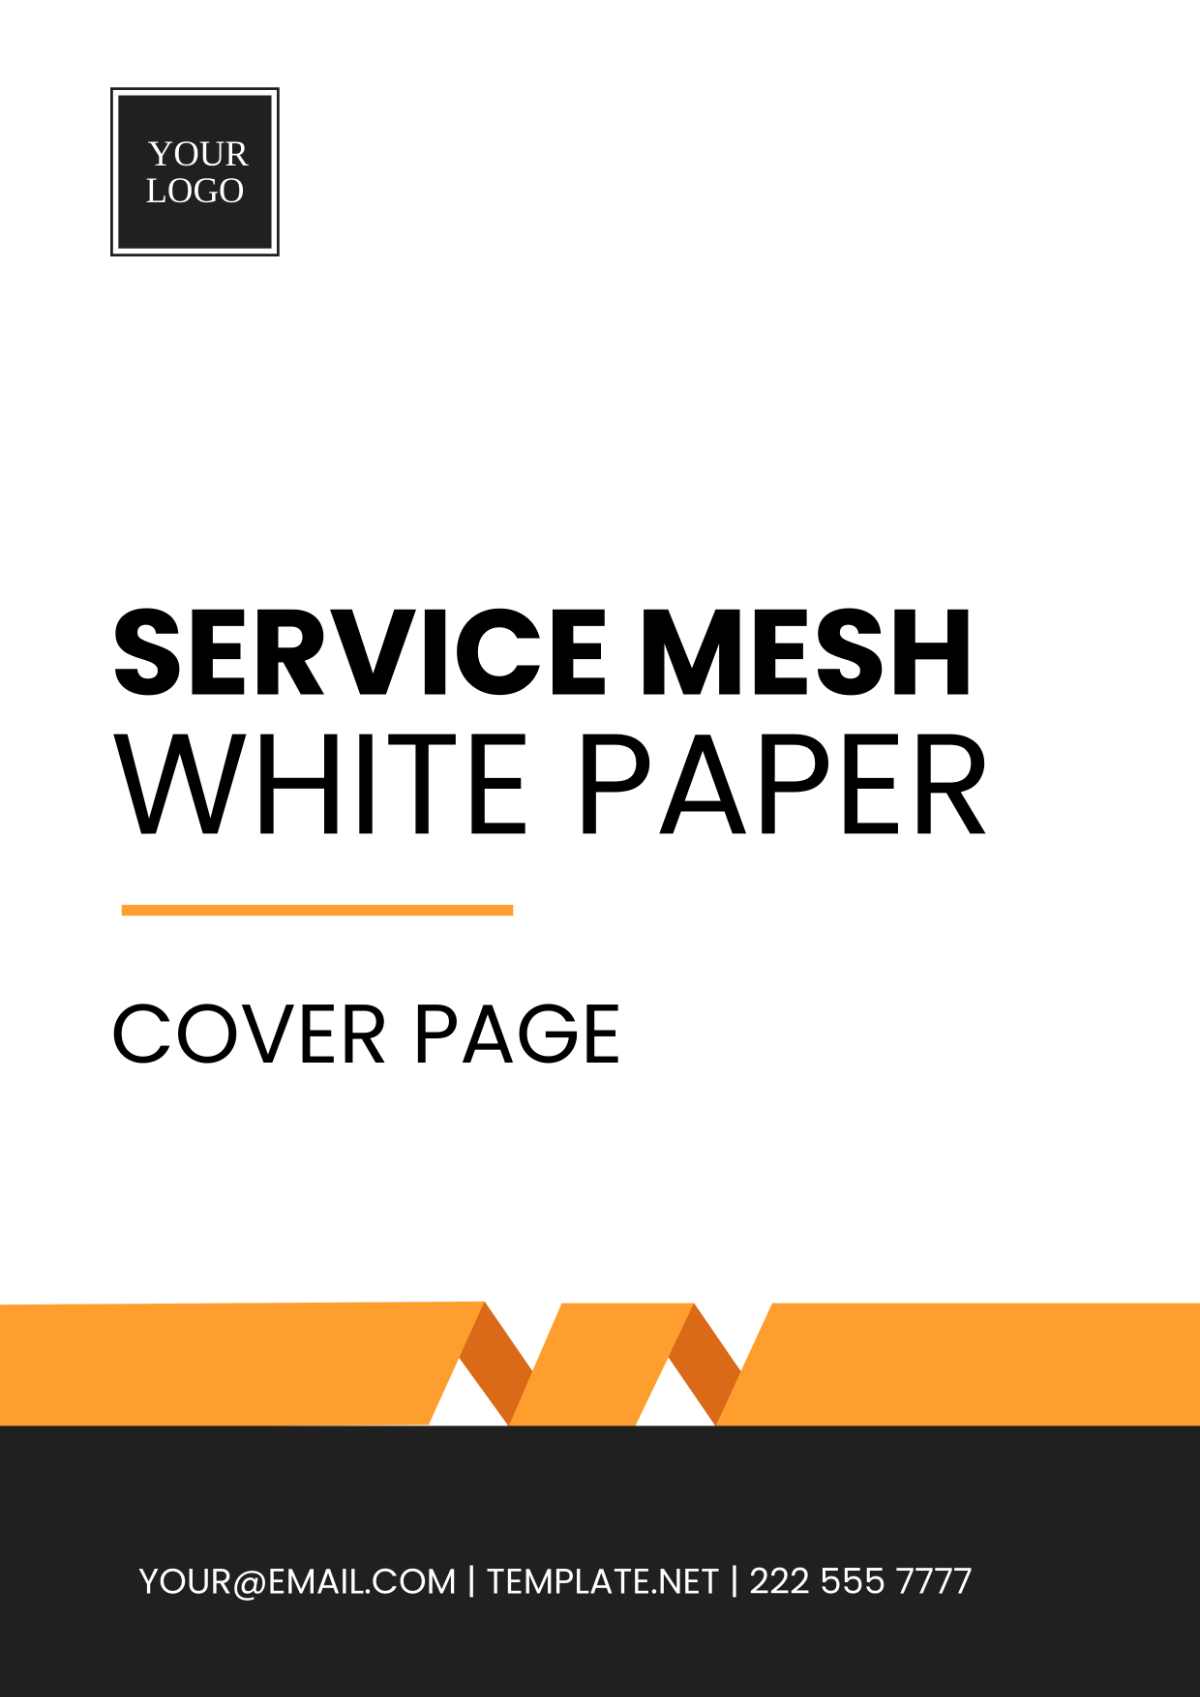 Service Mesh White Paper Cover Page